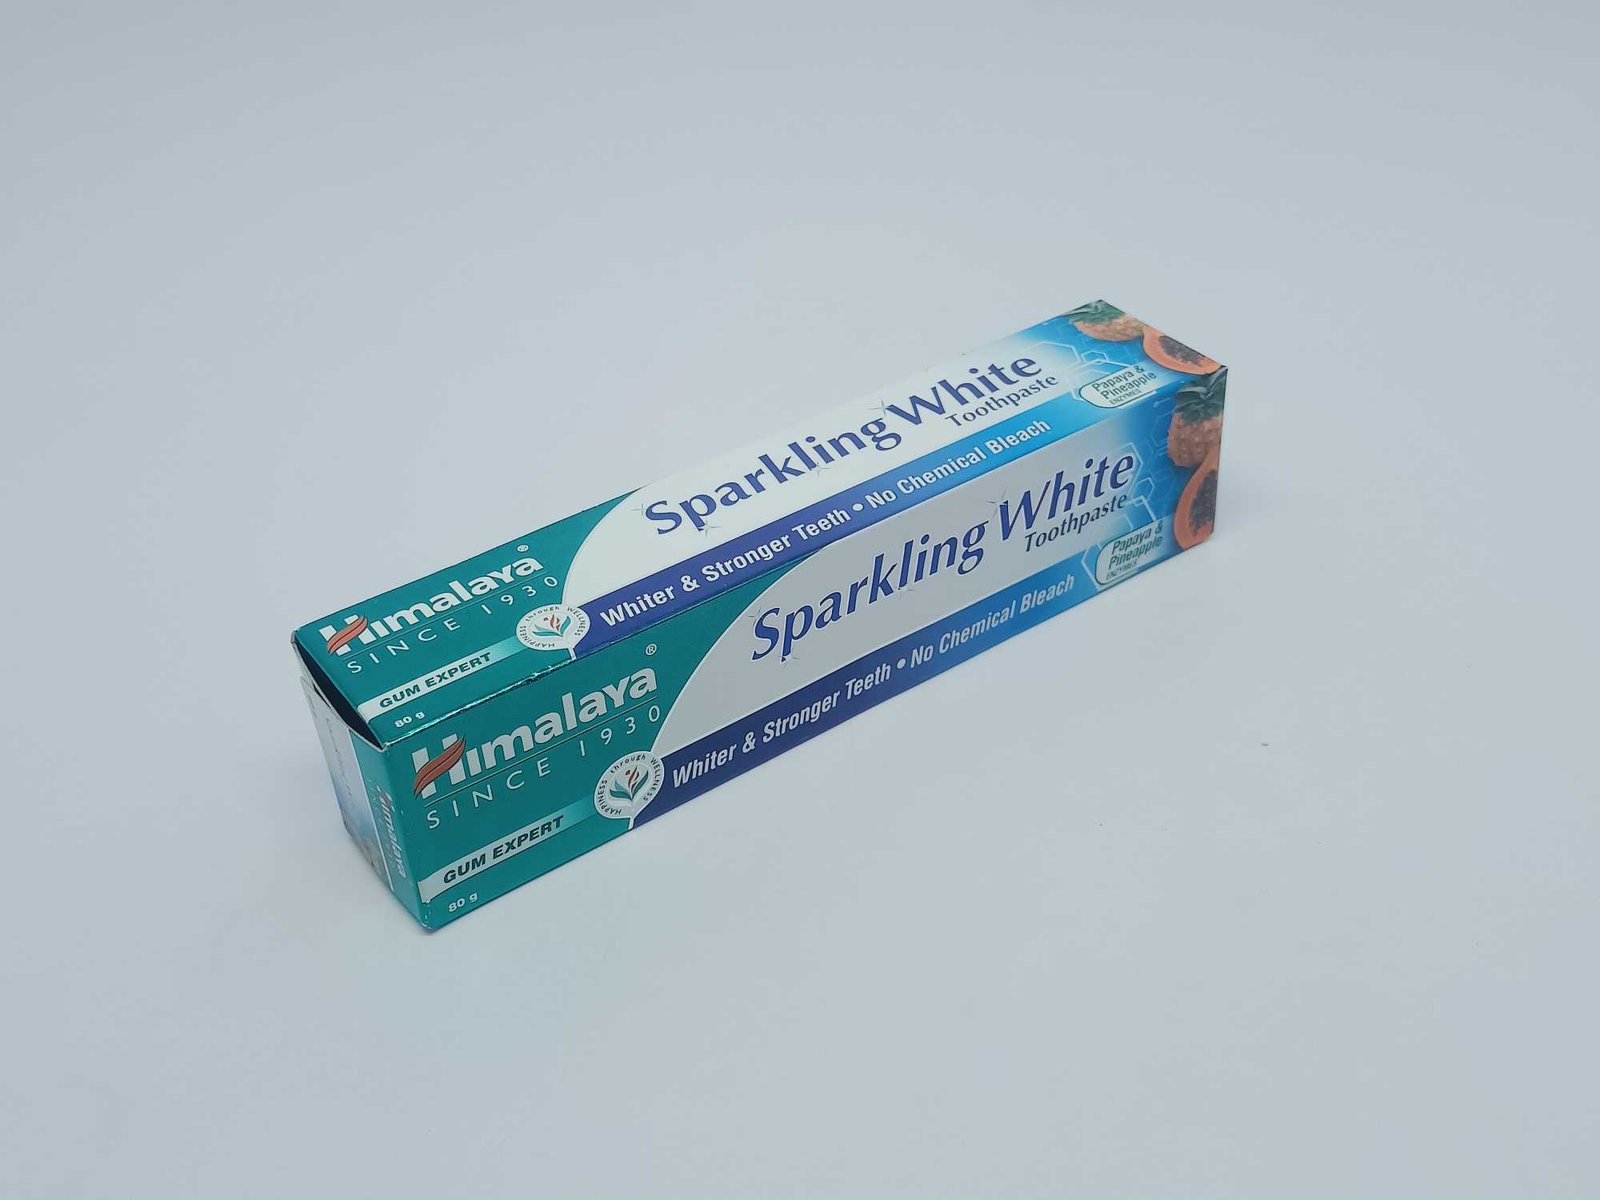 Himalaya Sparkling White Toothpaste Gum Expert No Chemical Bleach, 80 gram